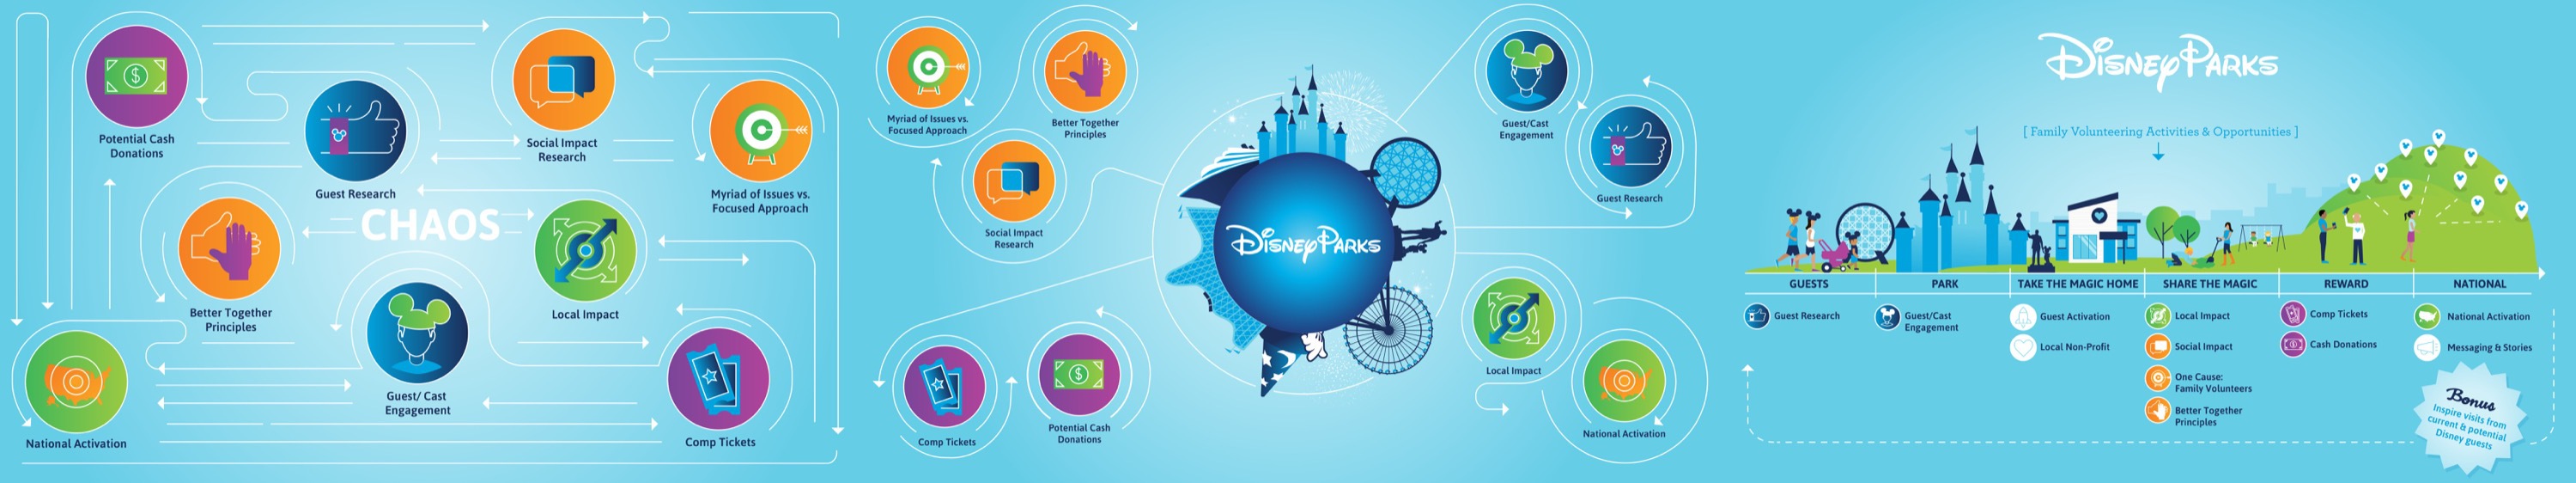 Disney Corporate Citizenship Department Explanation Presentation